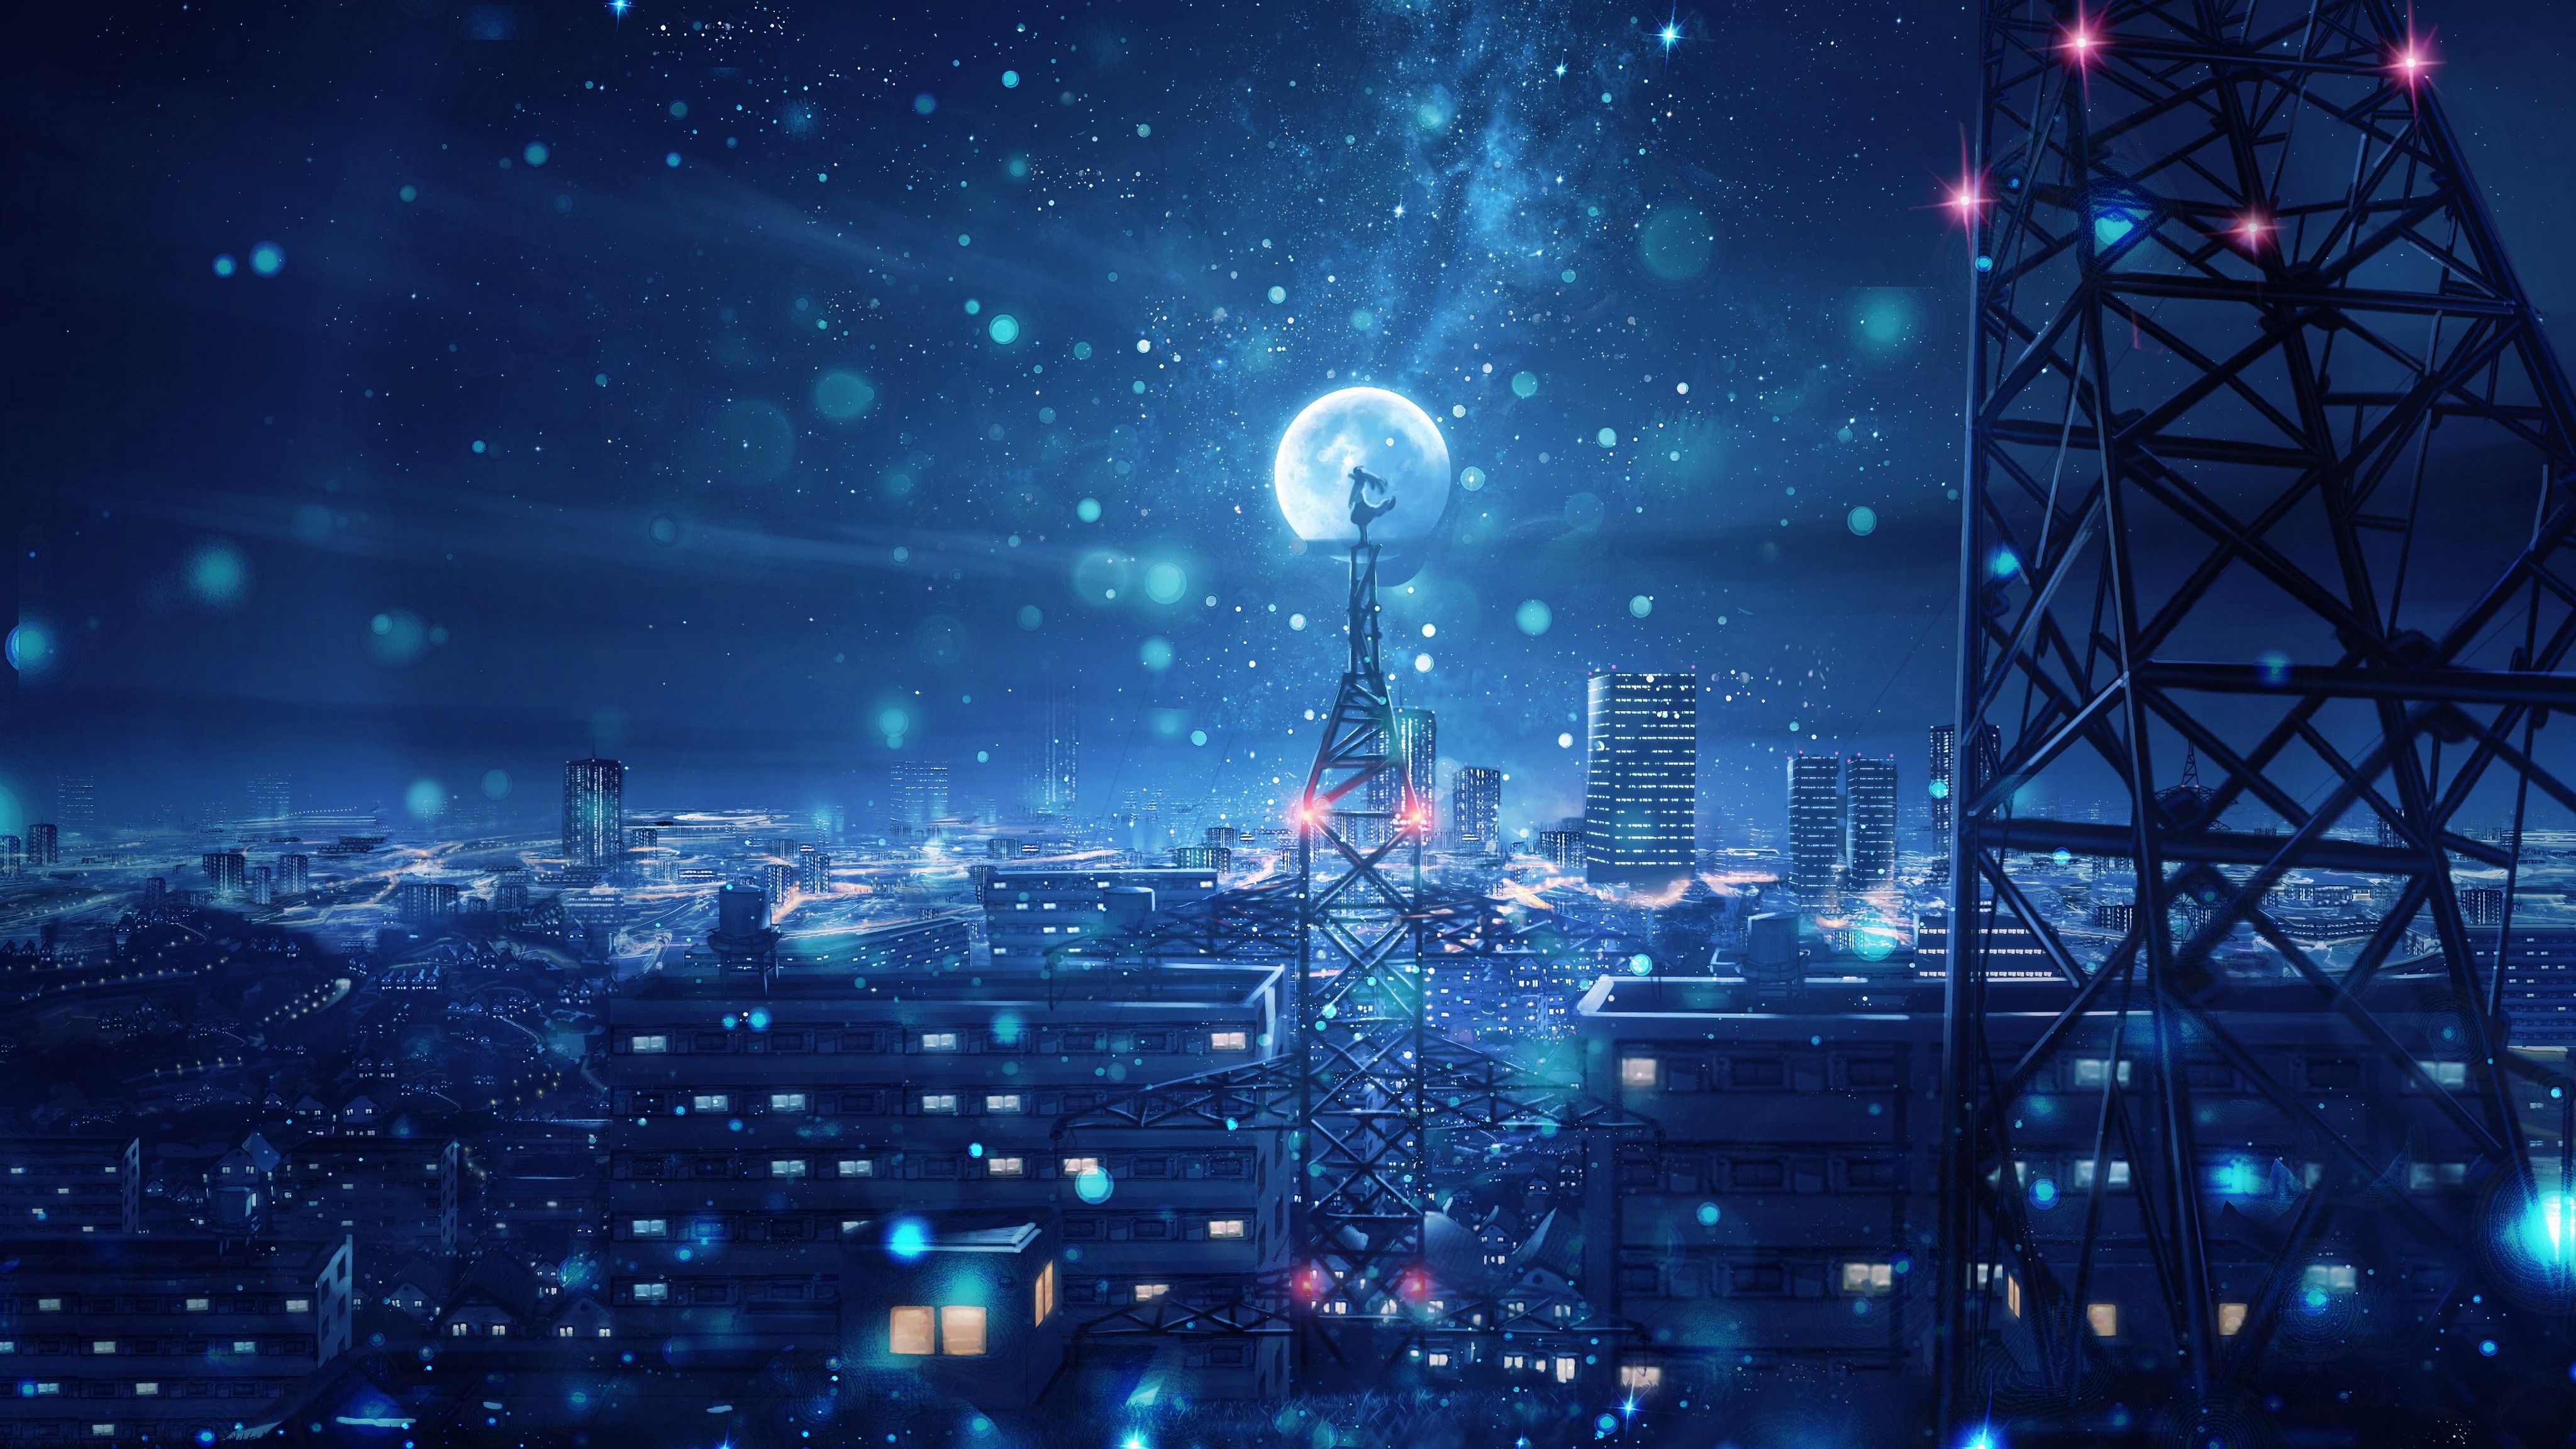 Dream 4K Wallpaper, Blue, Cityscape, Snowfall, Moon, Cold night